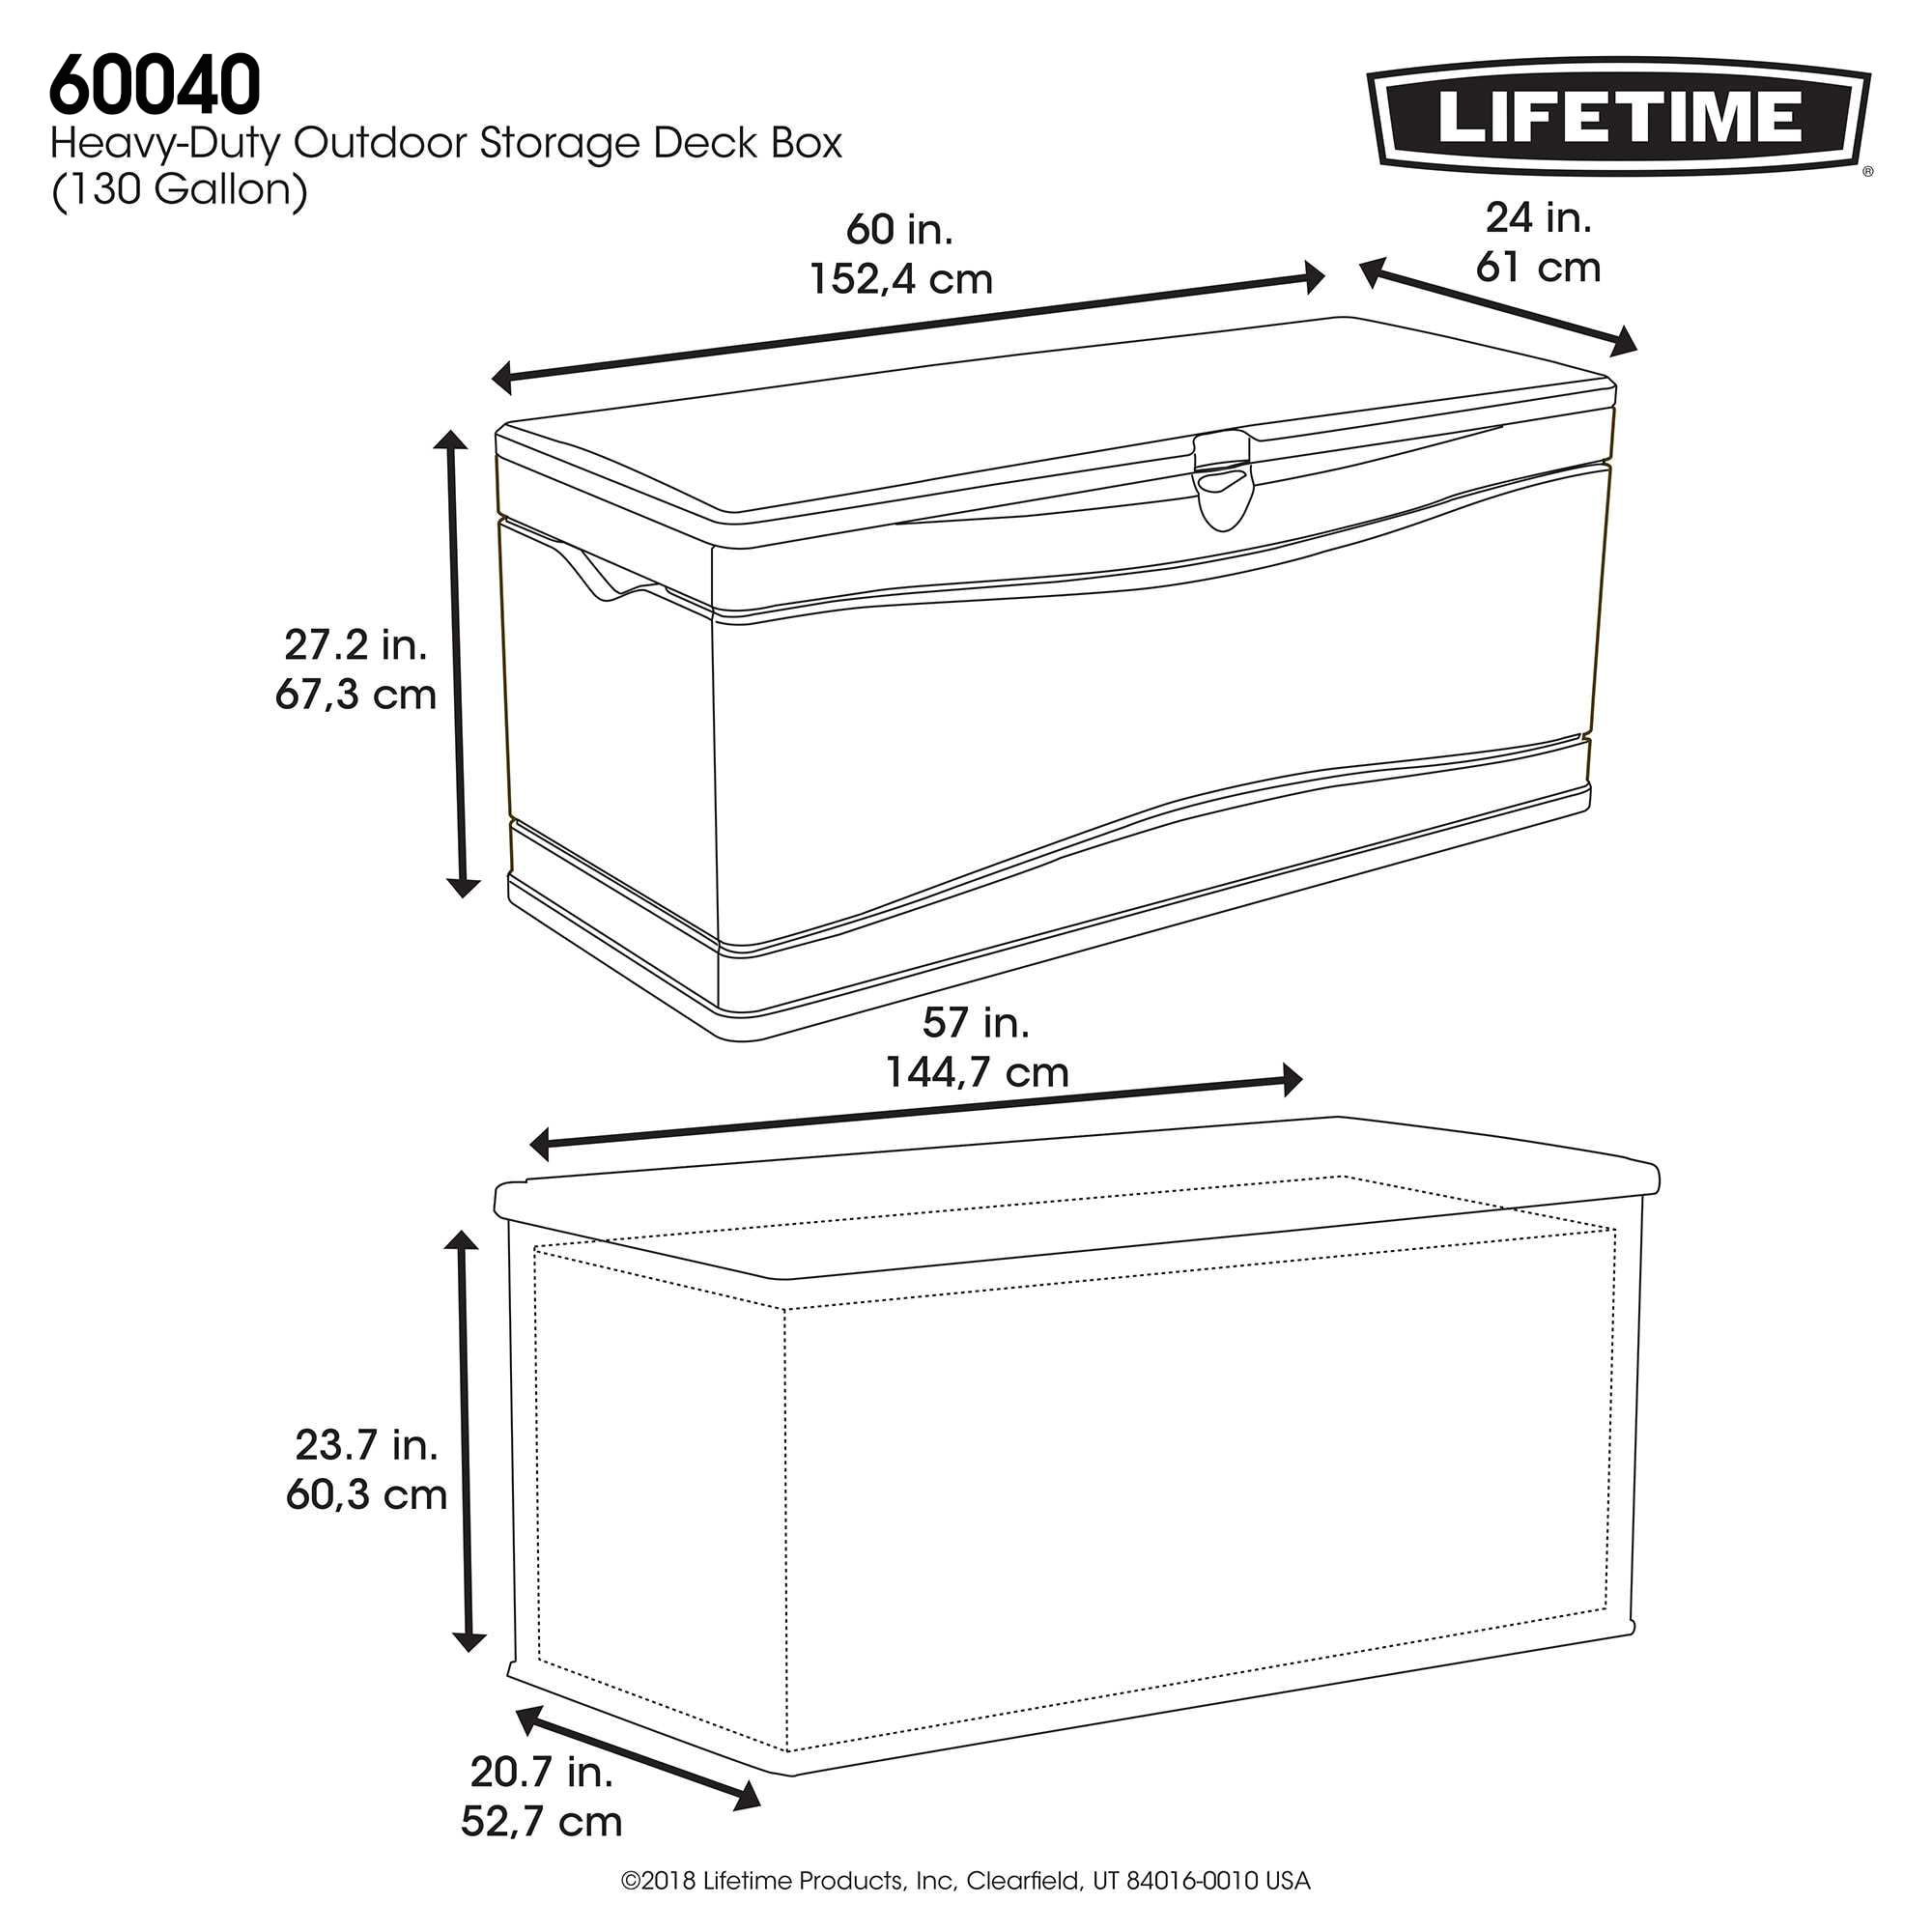 Fashion merchandise Lifetime Modern Outdoor Storage Deck Box (136 Gallon)  60367, lifetime storage box